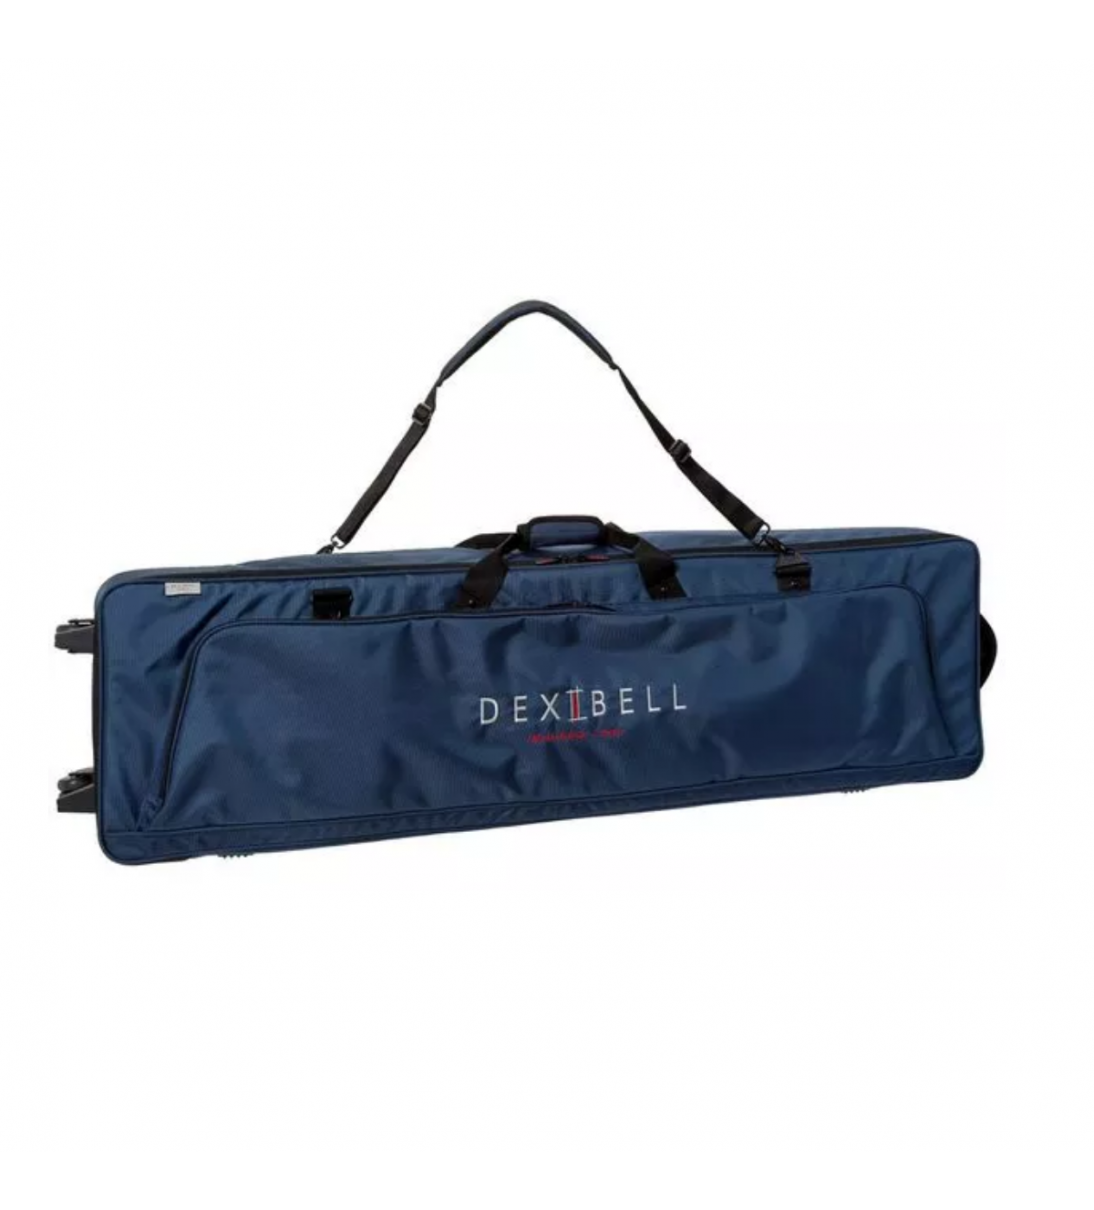 DEXIBELL S9 / S7Pro Bag (1265 x 355 x 120mm)